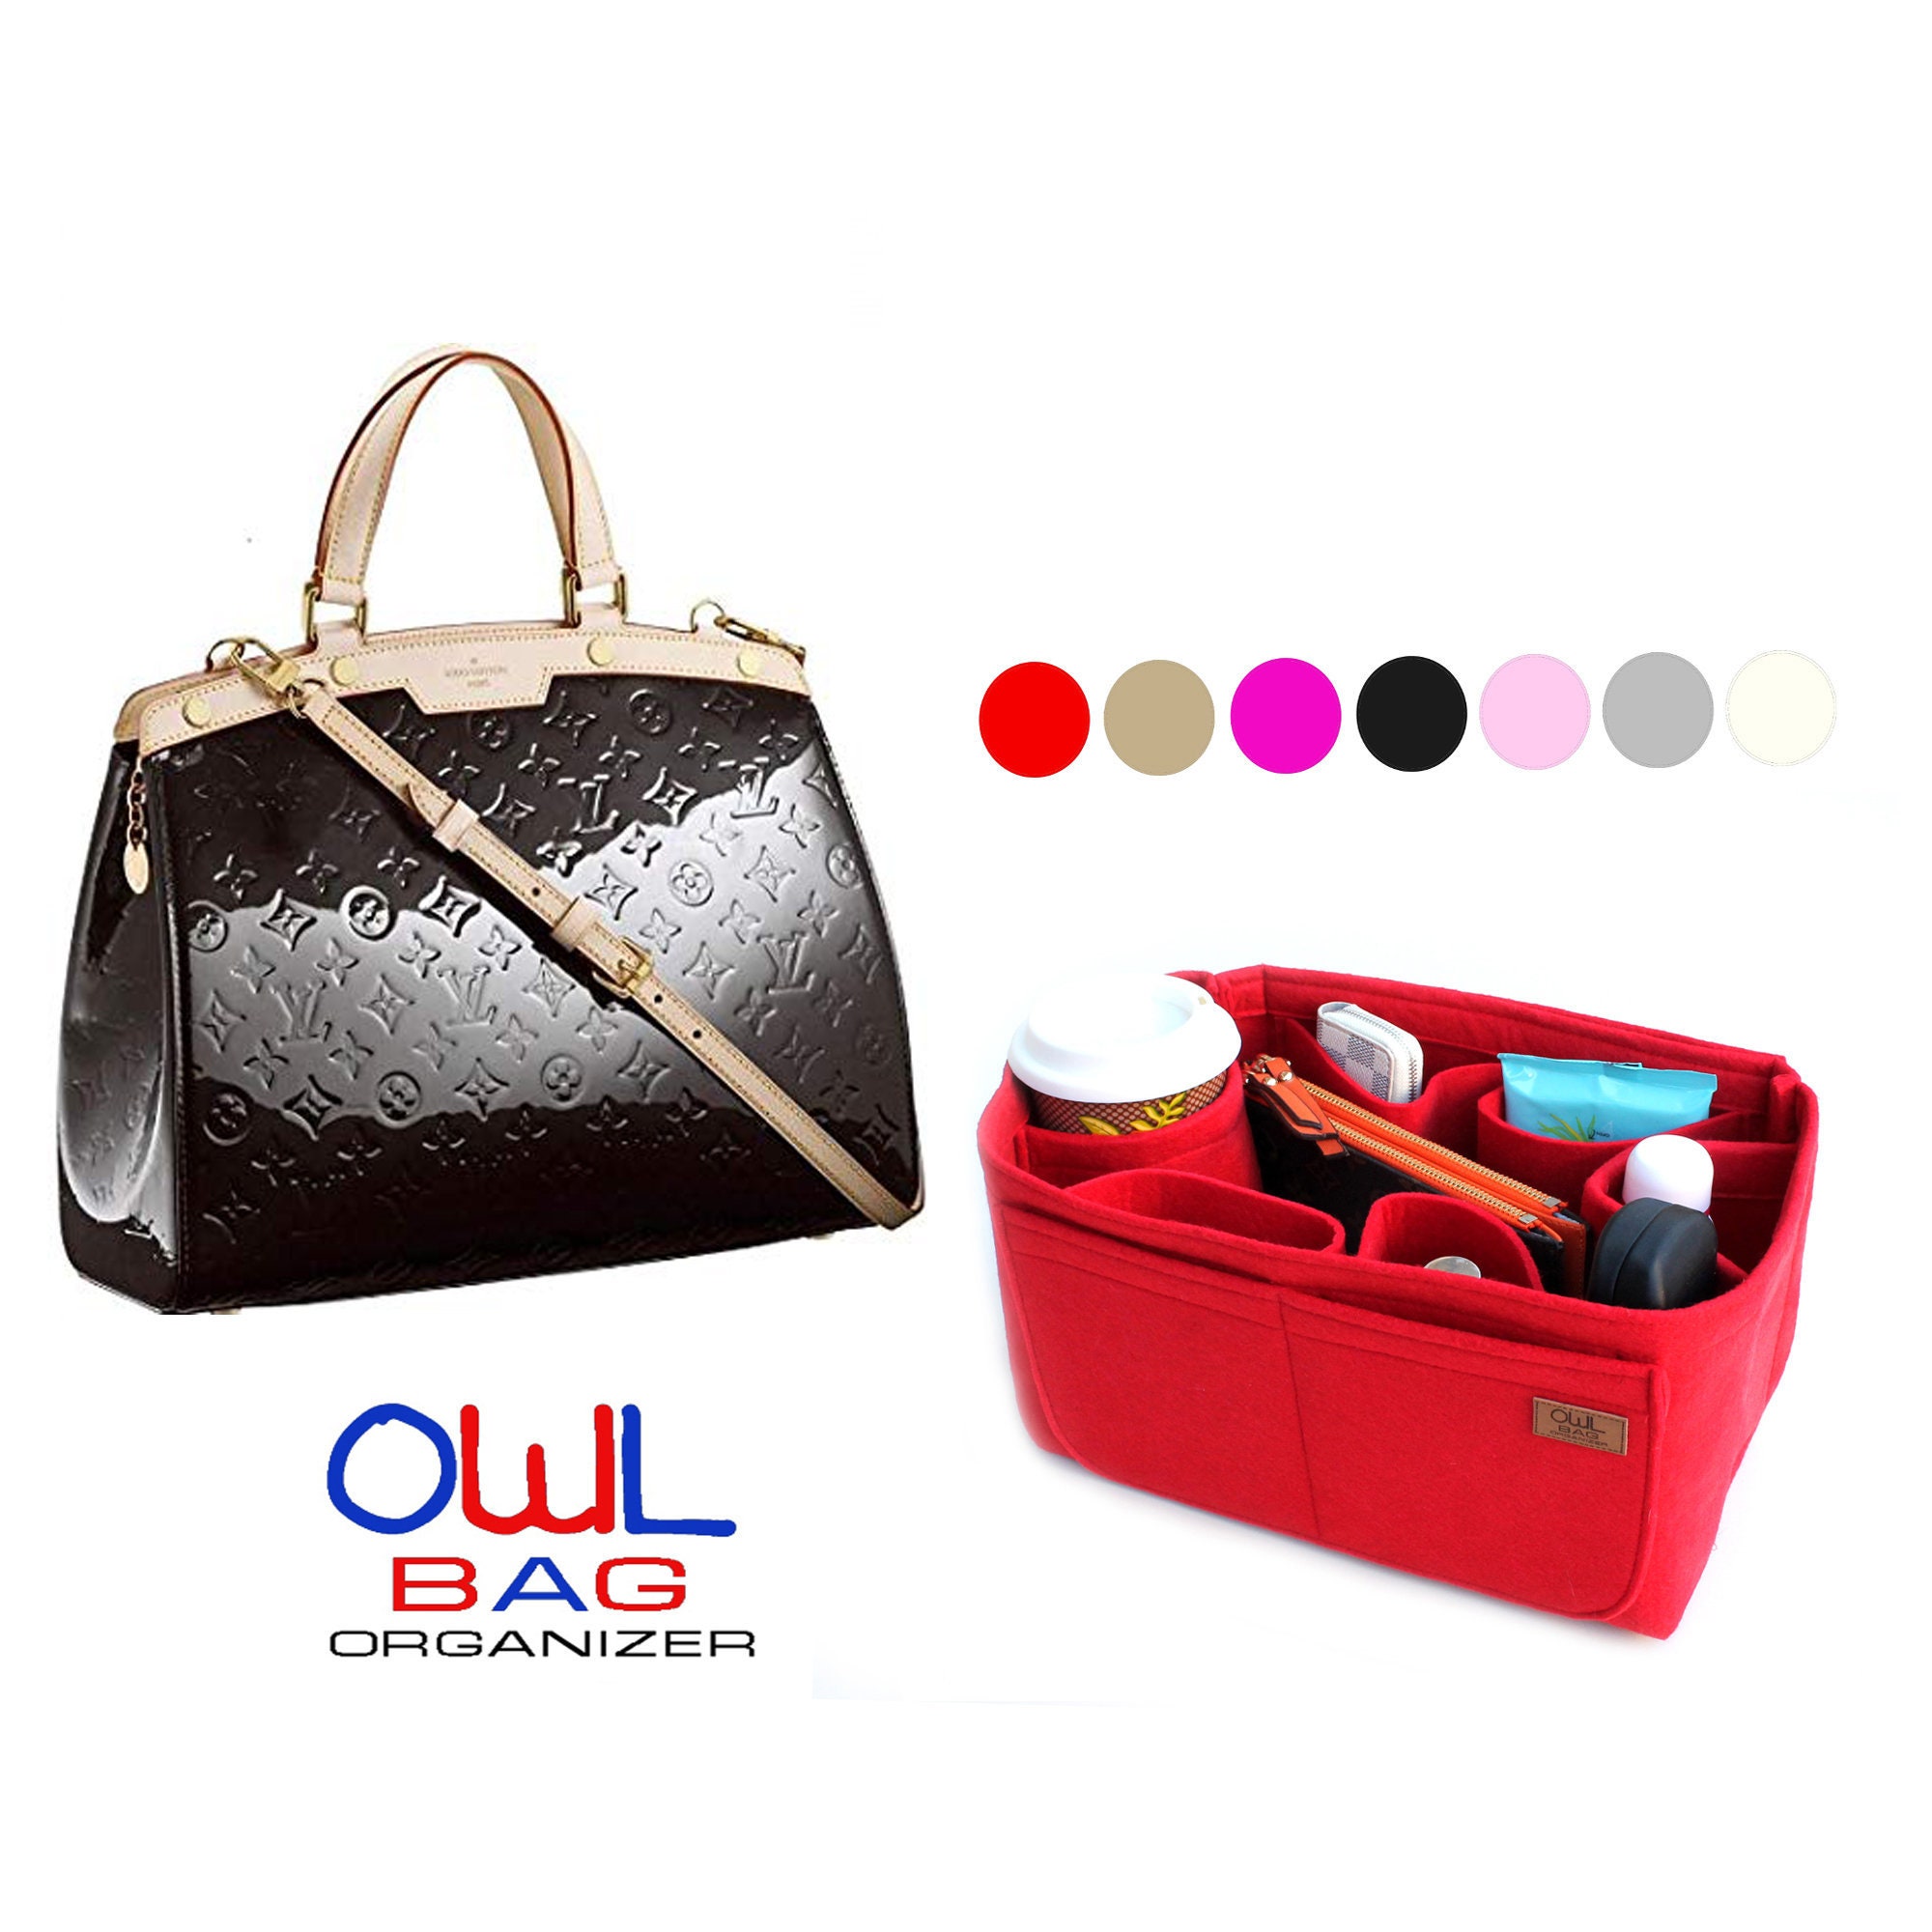 Buy Bag Organizer for LV Louis Vuitton Organizer Bag Purse Online in India  